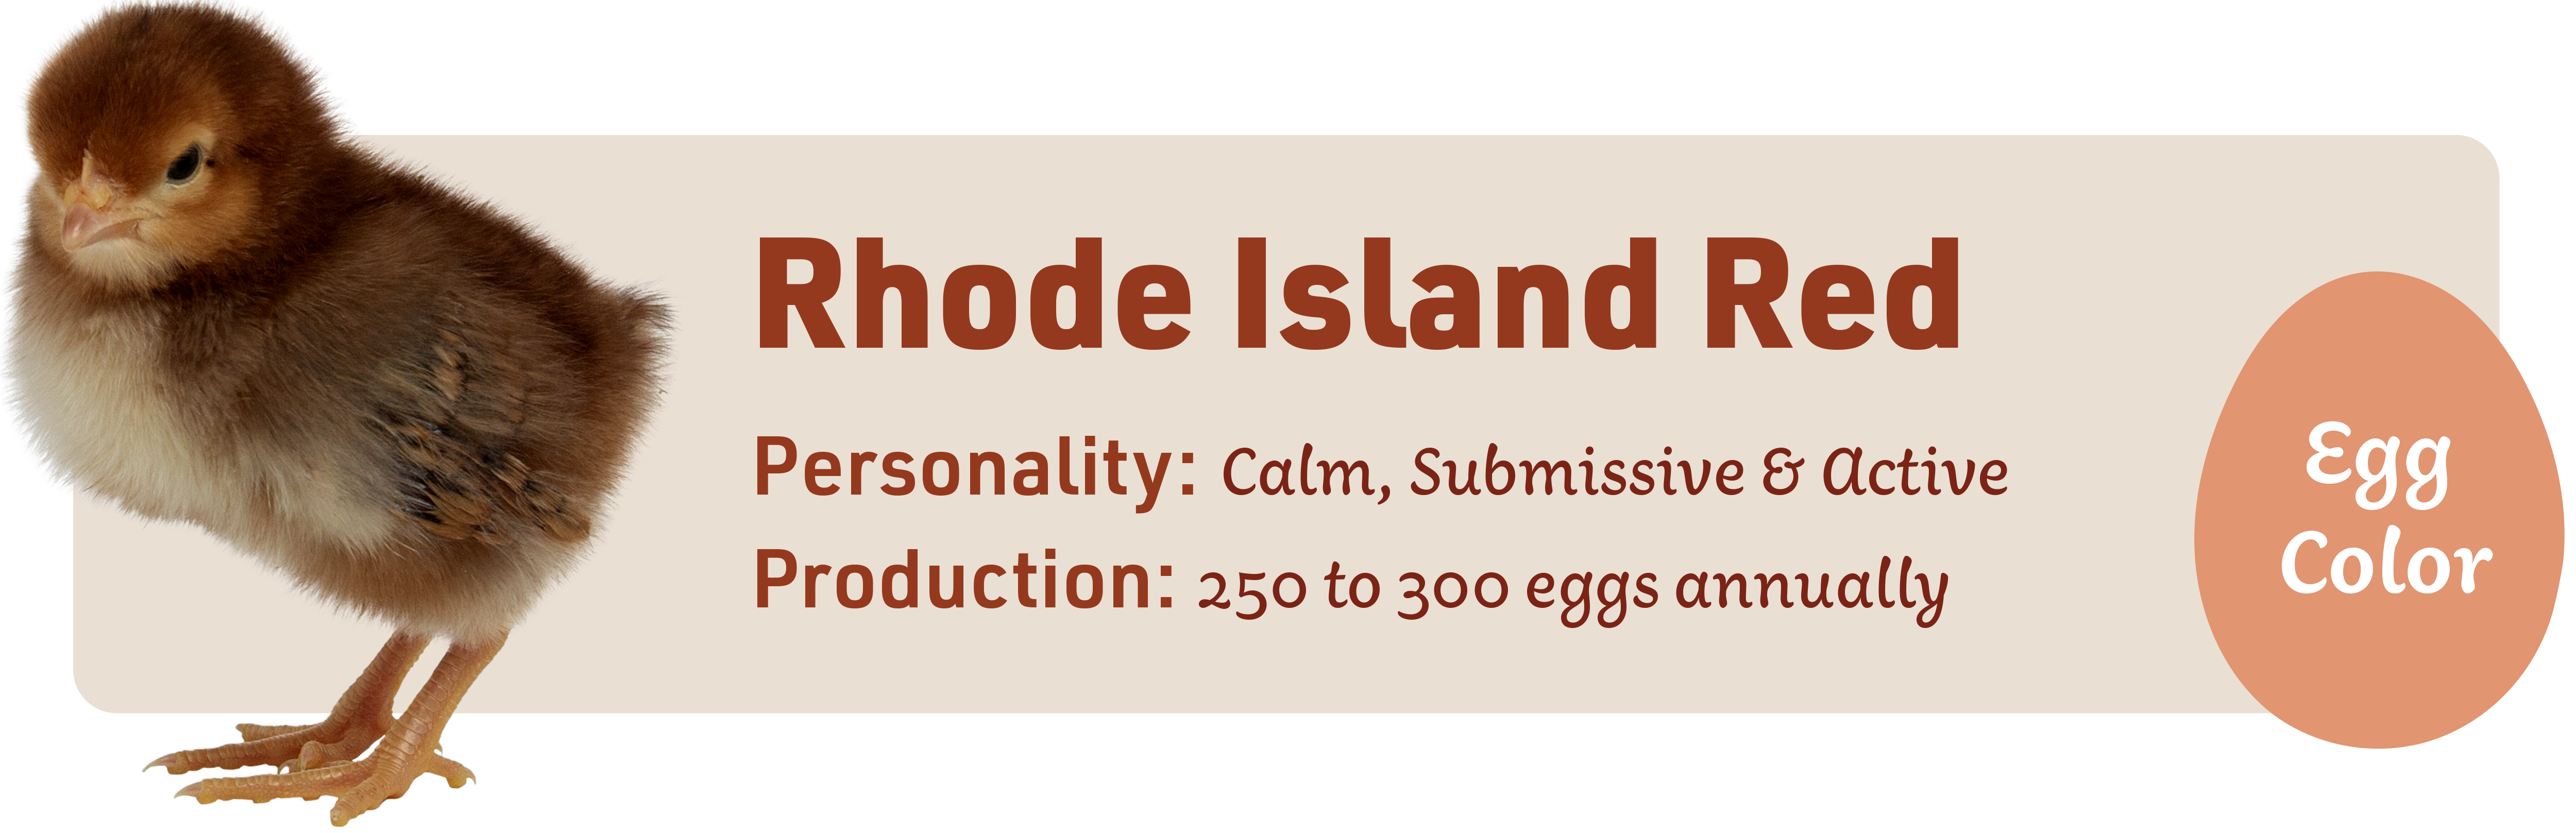 Rhode_Island_red_Popular_chicks_v1-1